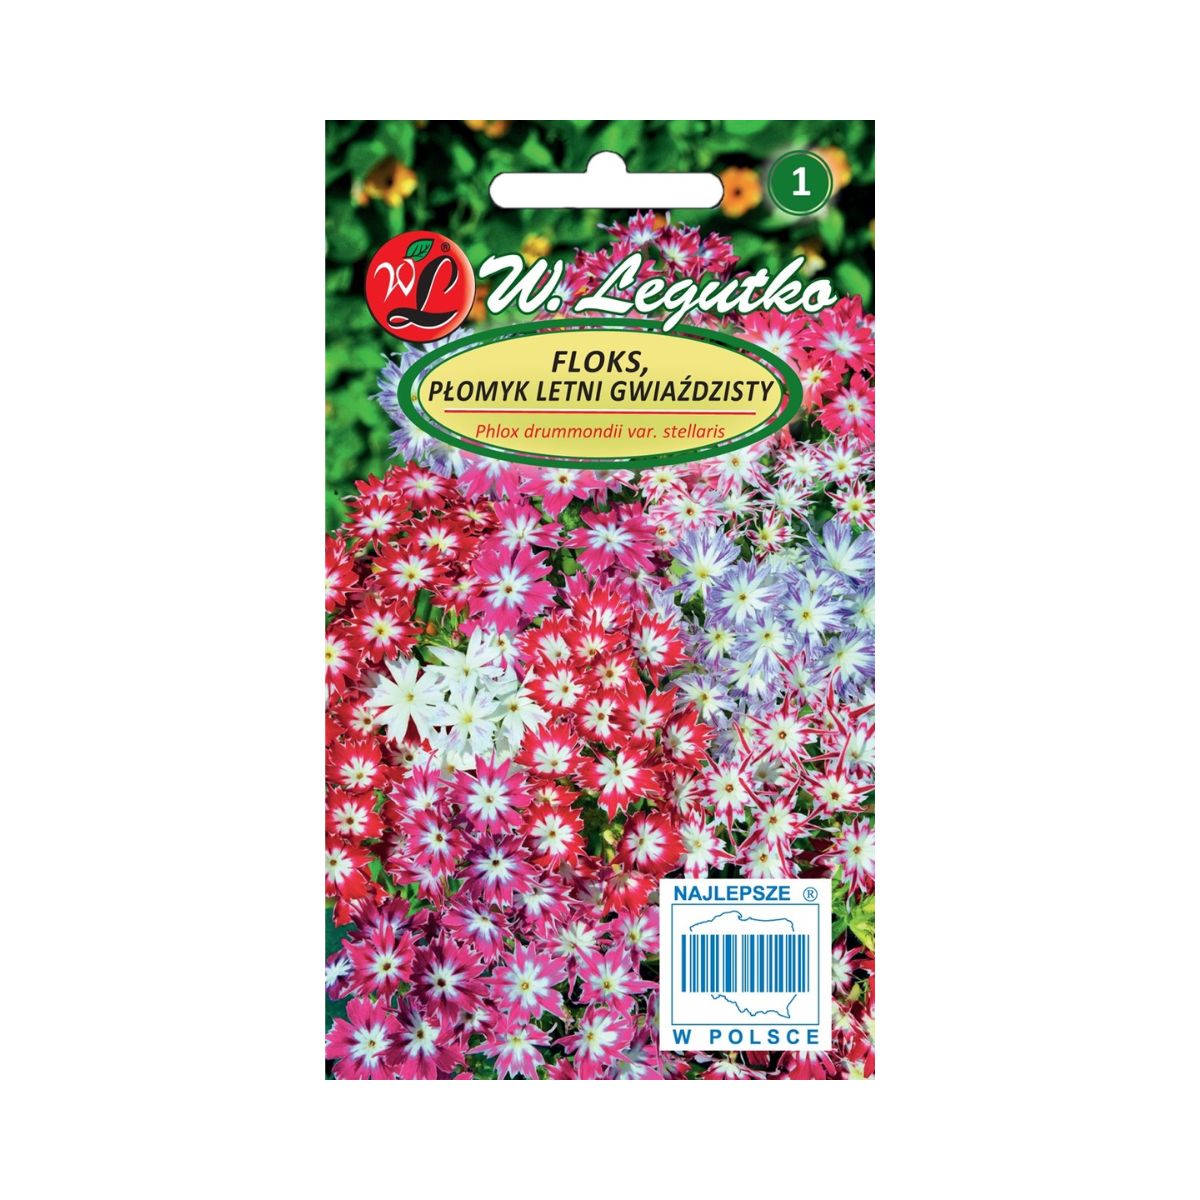 Seminte flori - Seminte de brumarele (Phlox) Cuspidata, 0,5 gr, LEGUTKO, hectarul.ro